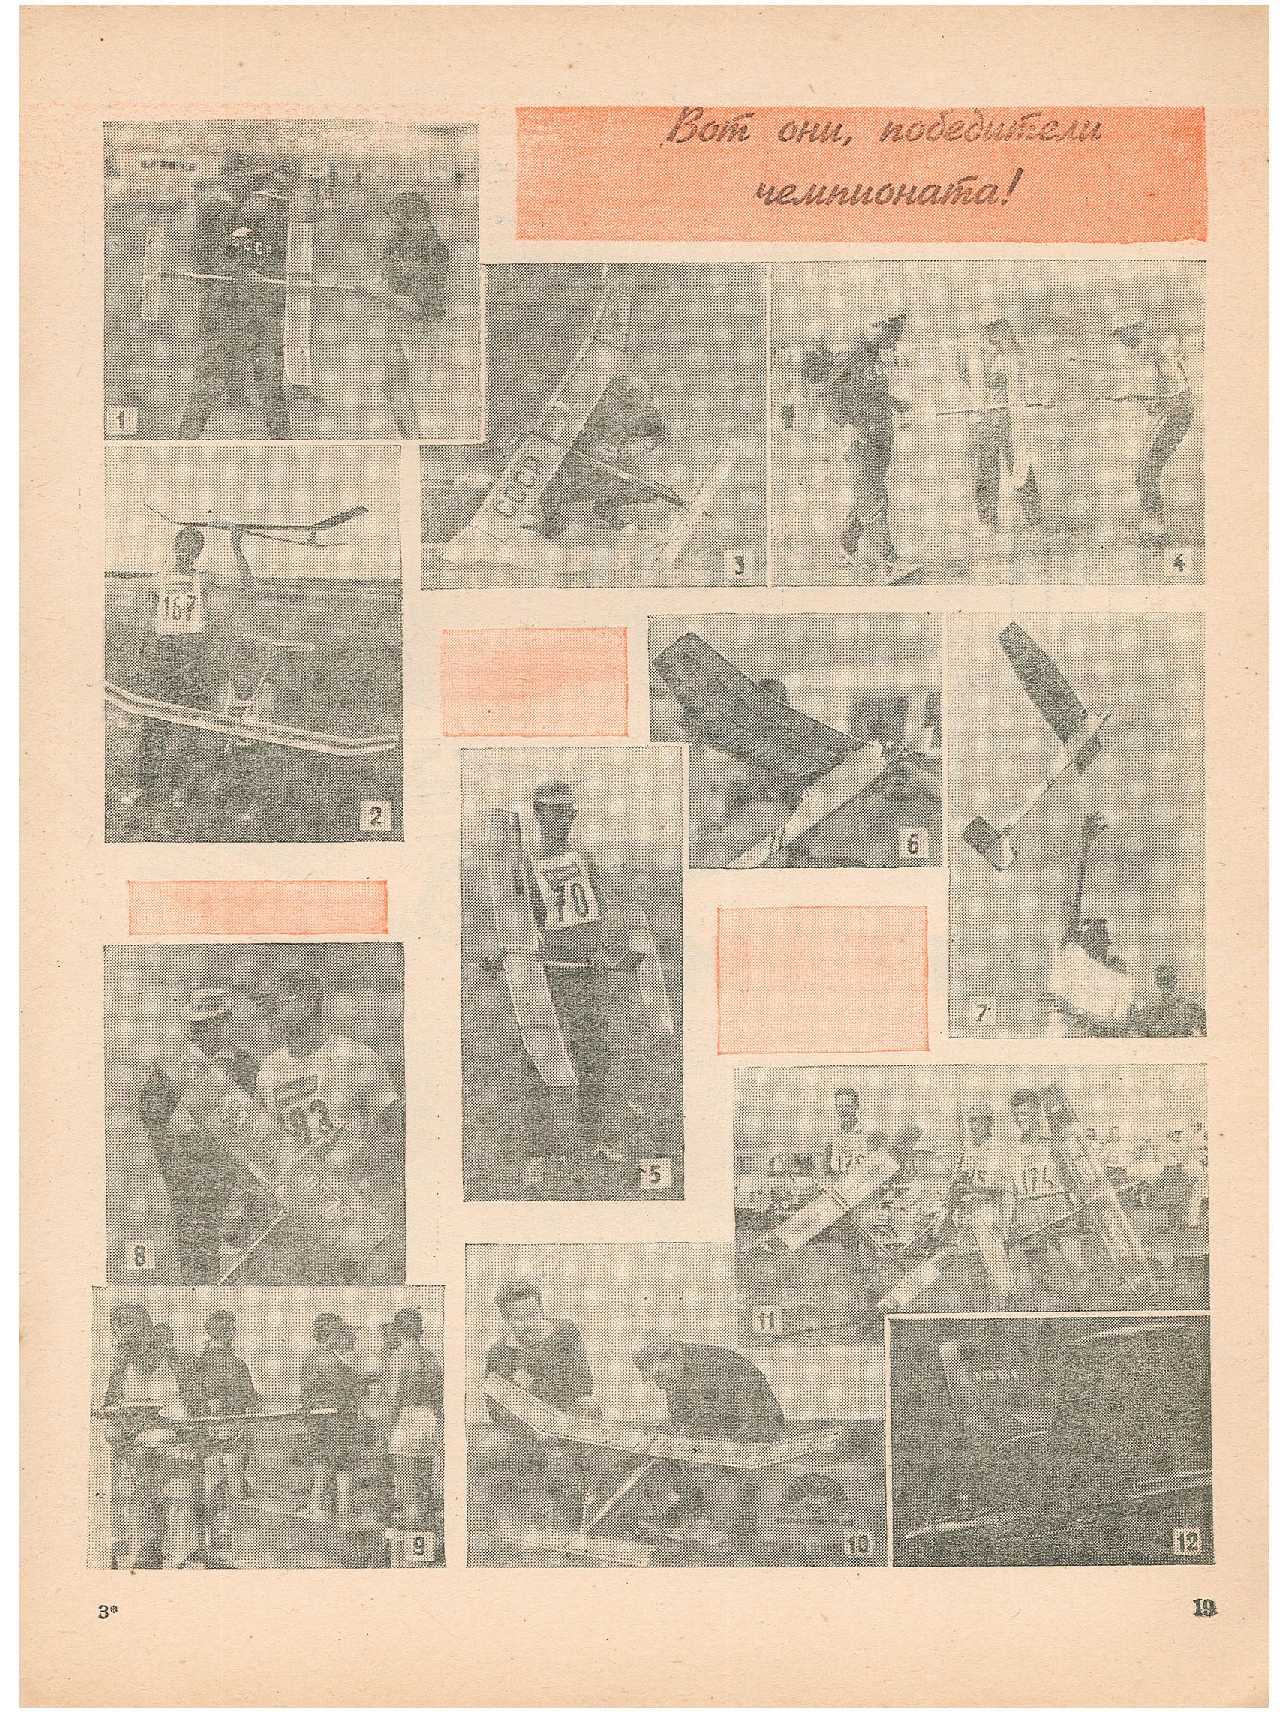 ЮМК 7, 1964, 19 c.